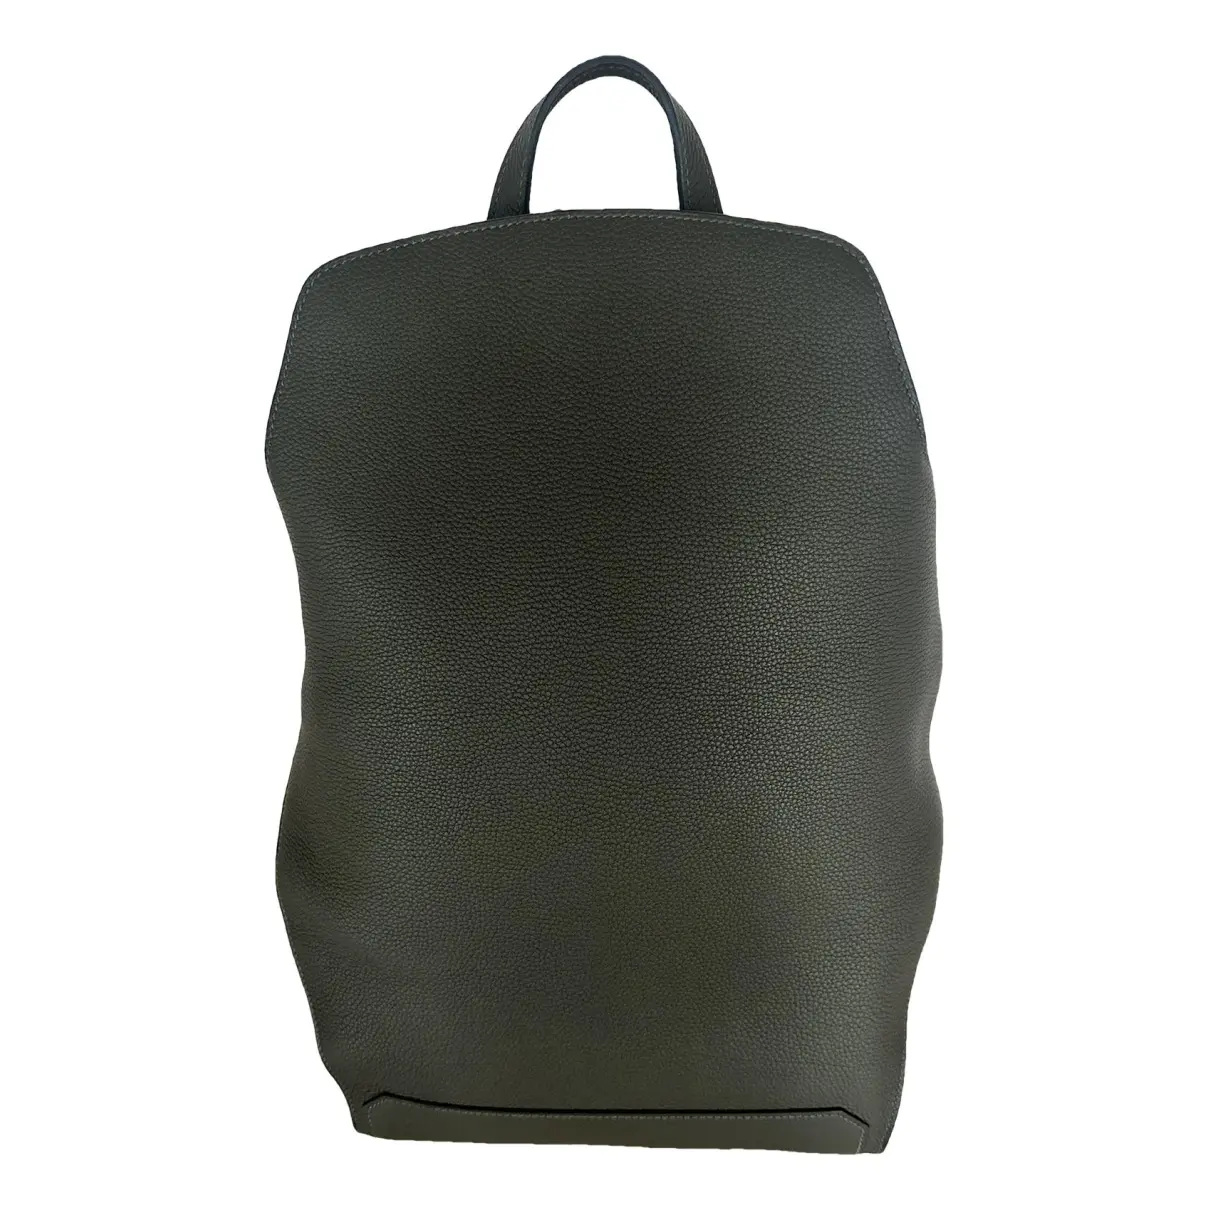 Cityback leather bag